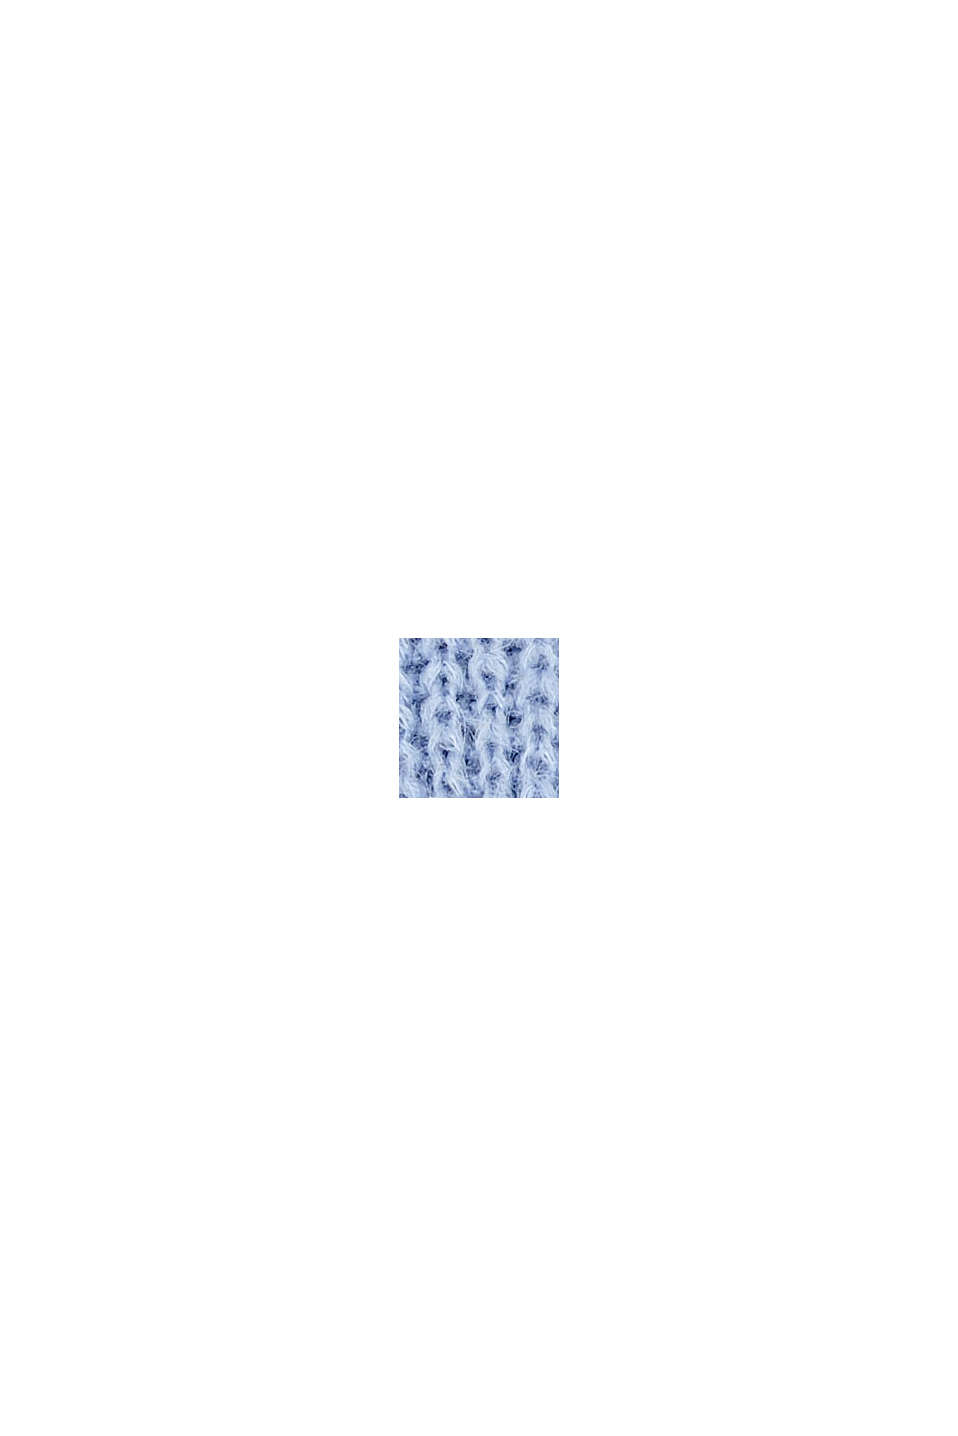 Con alpaca: sciarpa a maglia in tinta unita, GREY BLUE, swatch